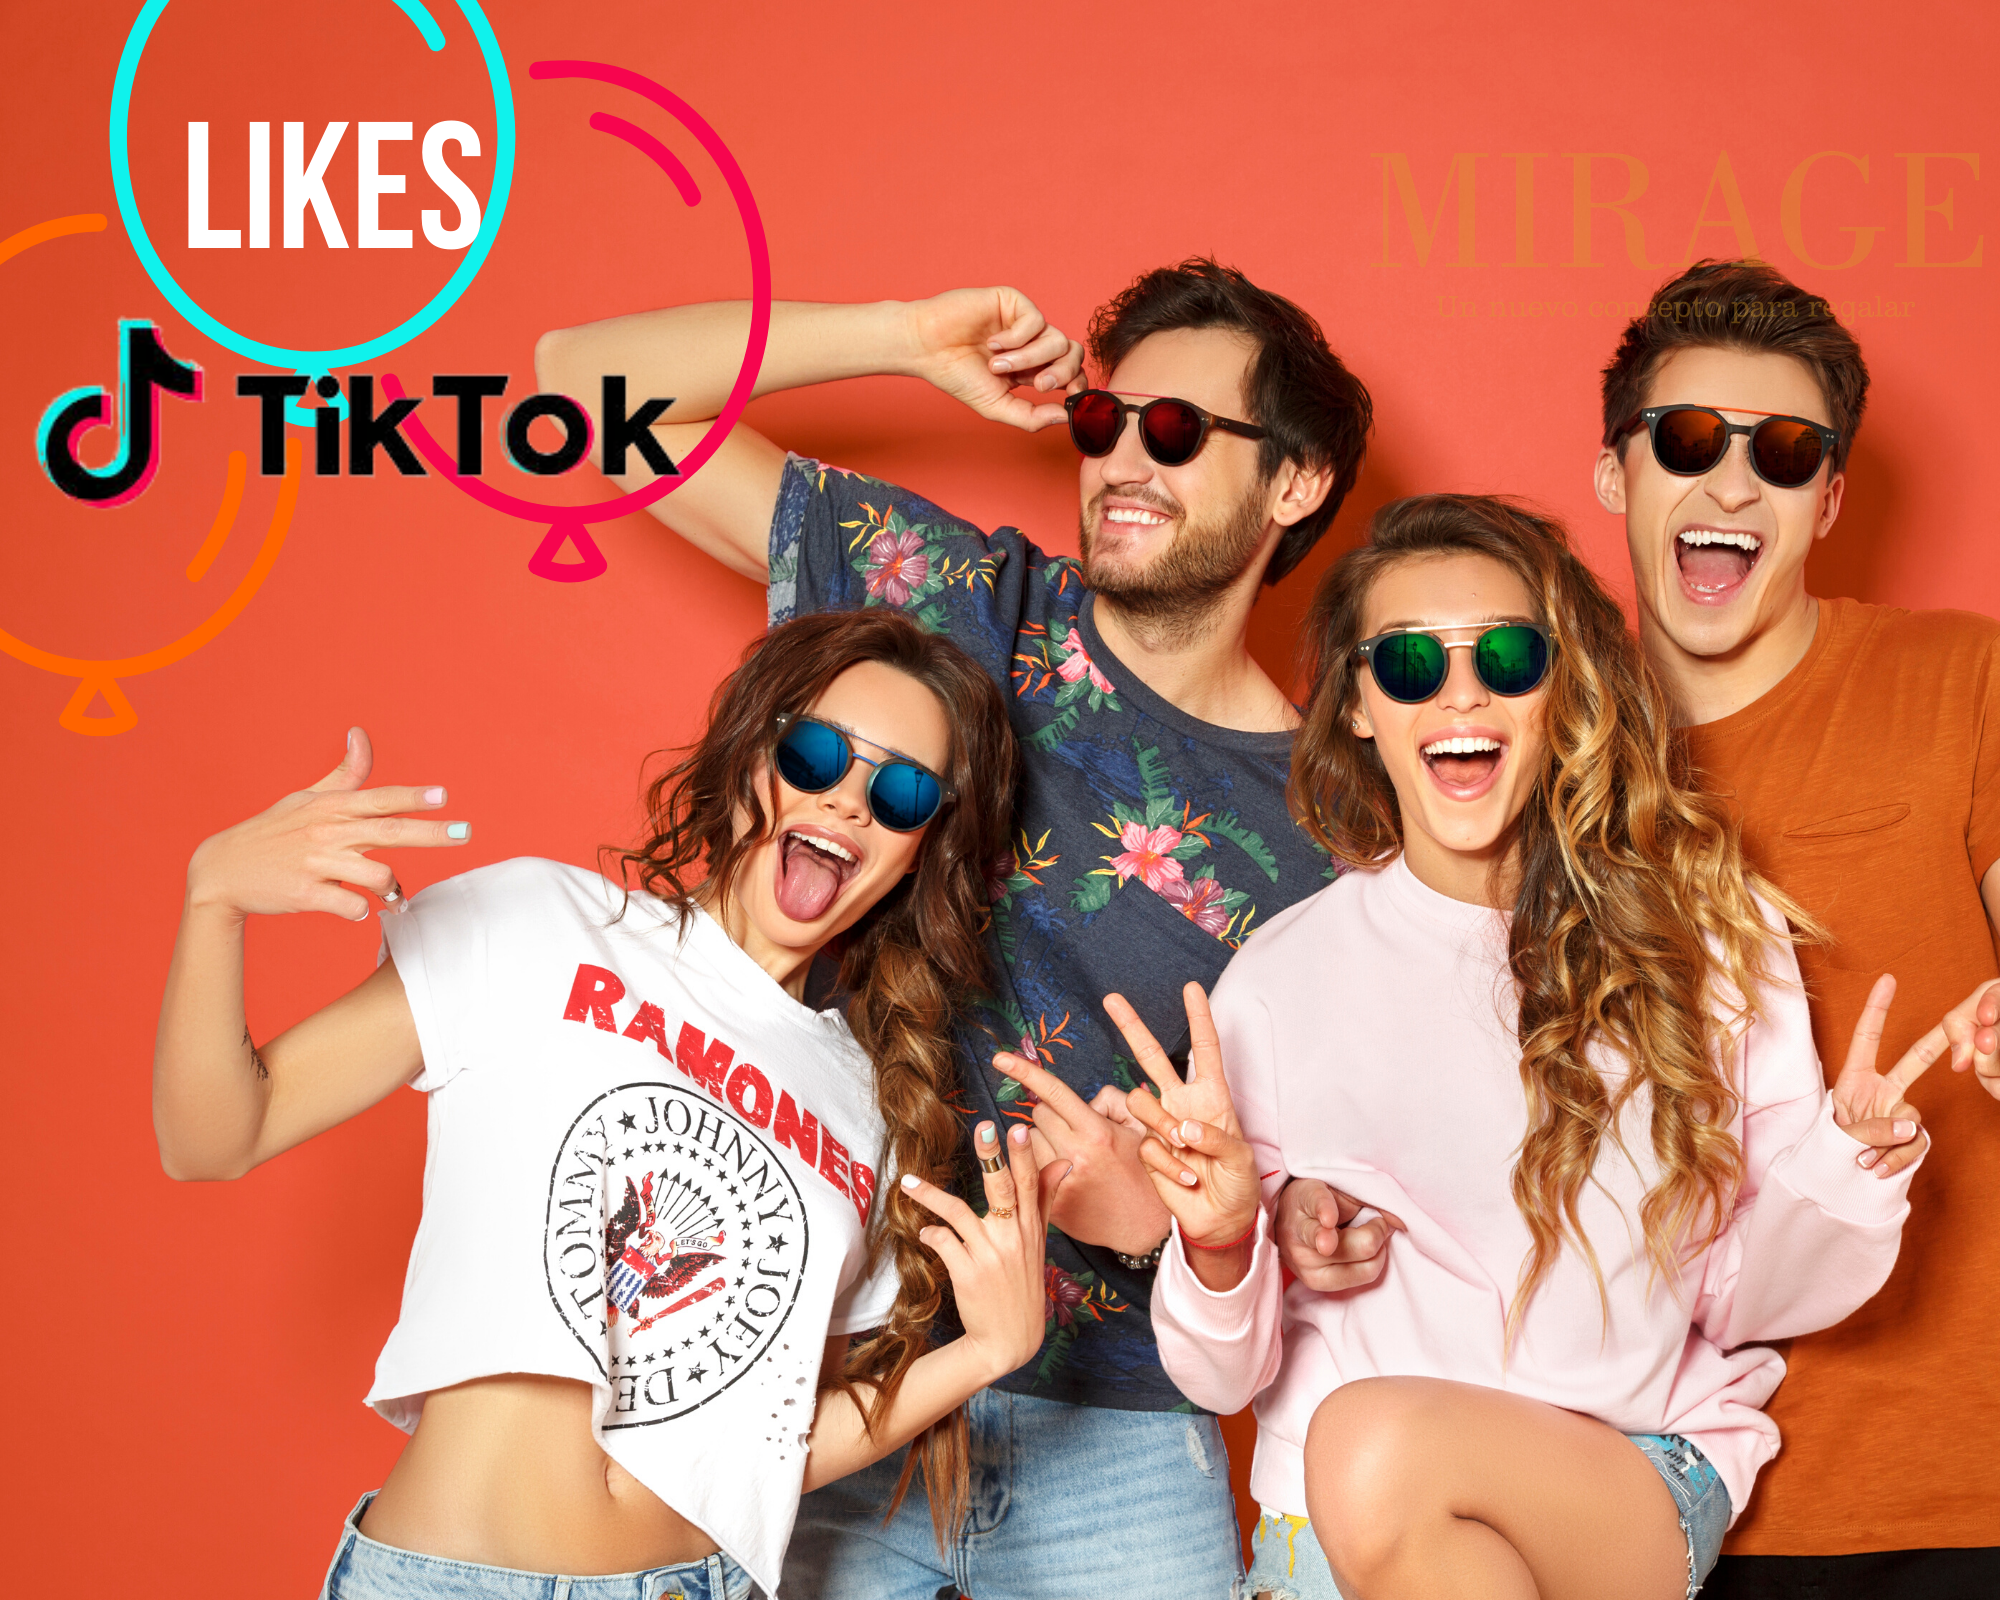 Comprar likes TikTok